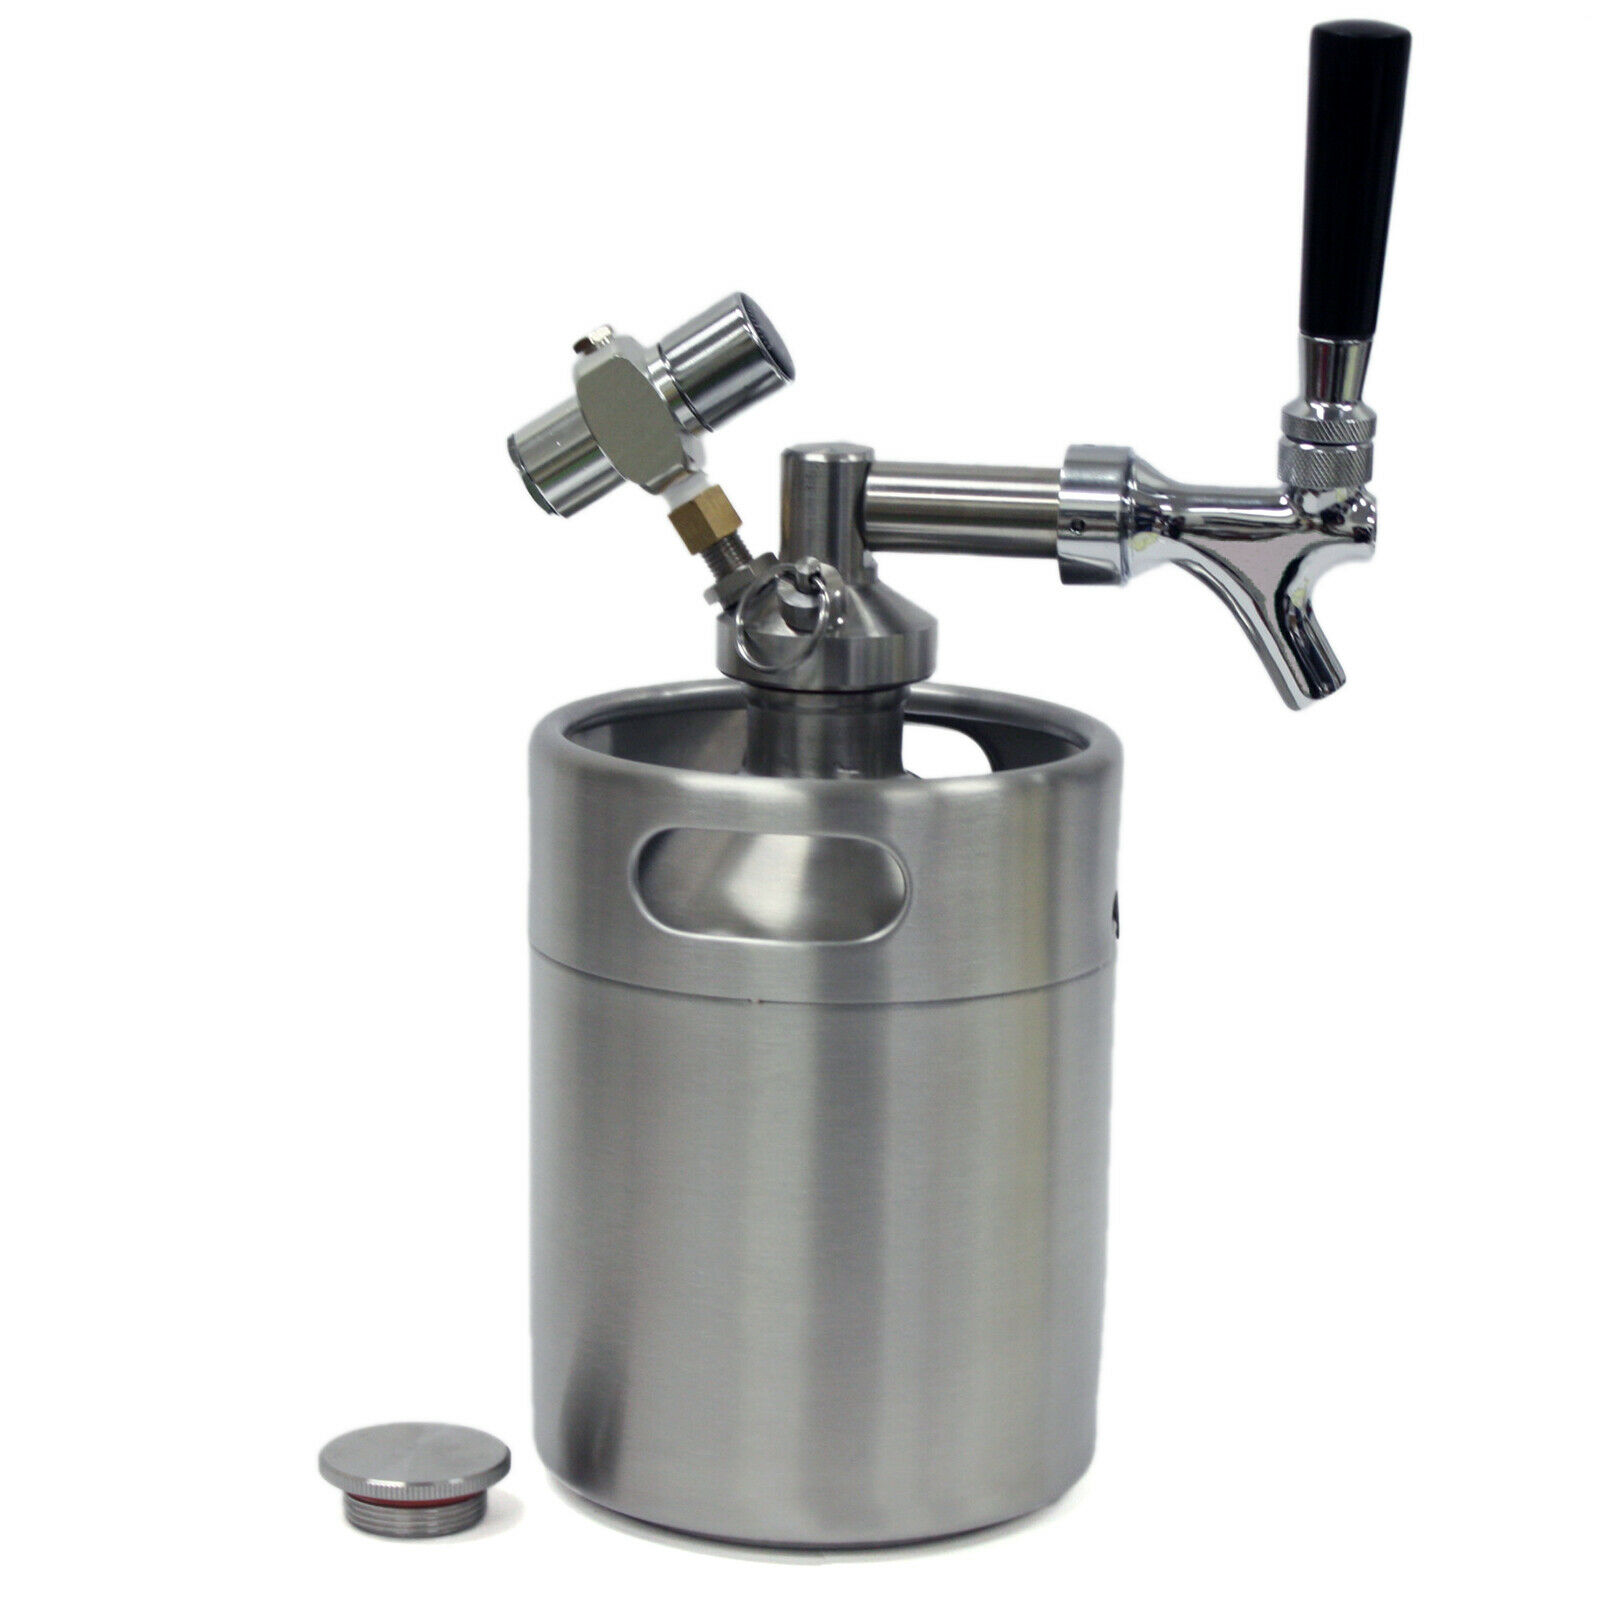 Nitro Stout Steel Tap Handled Faucet 8g N2O Gas Fits Mini Keg Beer Growler 2L 